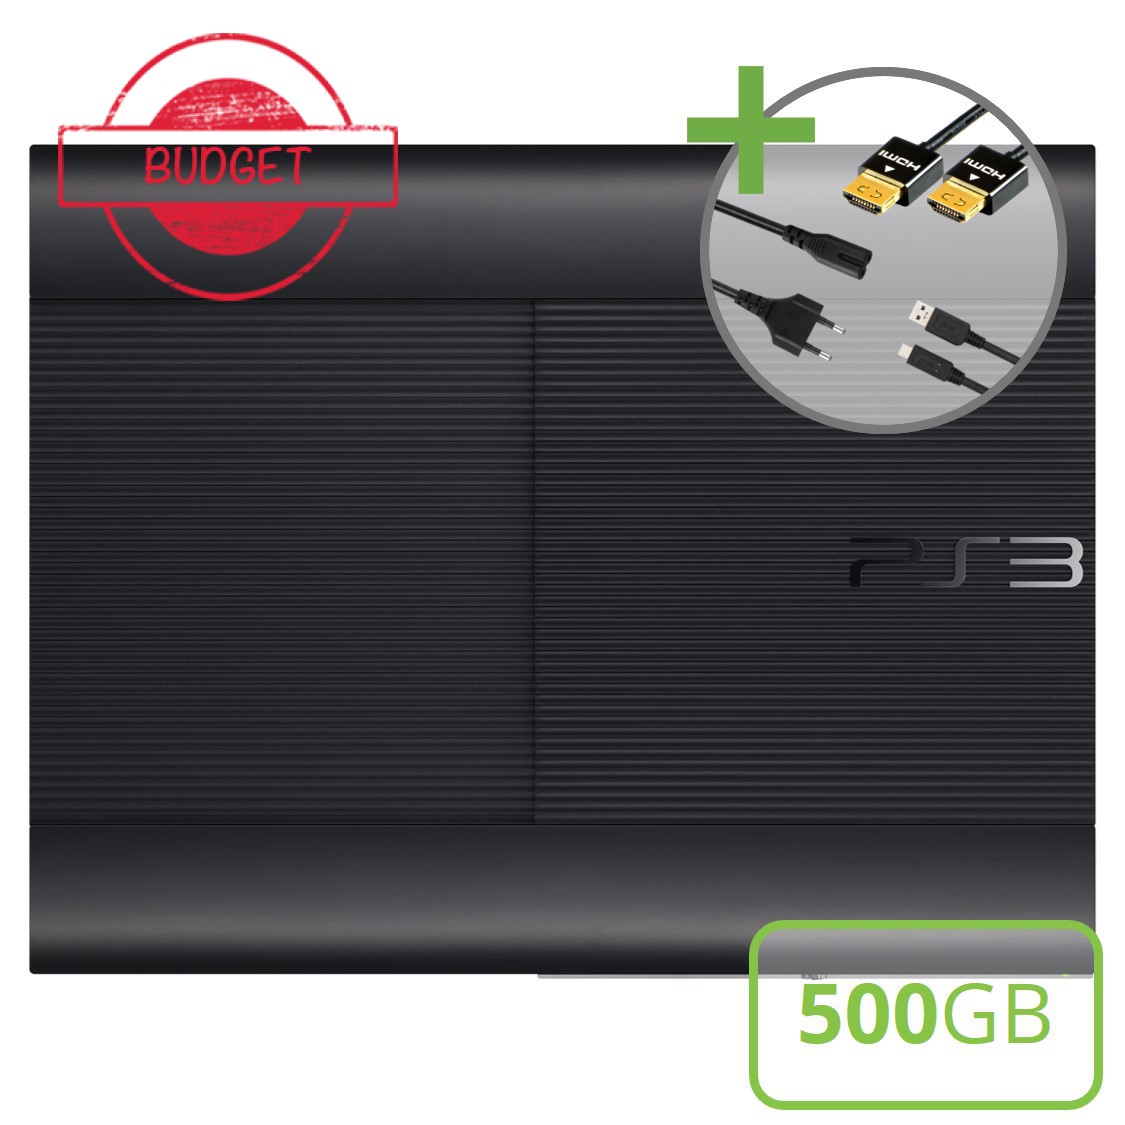 Sony PlayStation 3 Super Slim (500GB) Starter Pack - DualShock Edition - Budget - Playstation 3 Hardware - 3